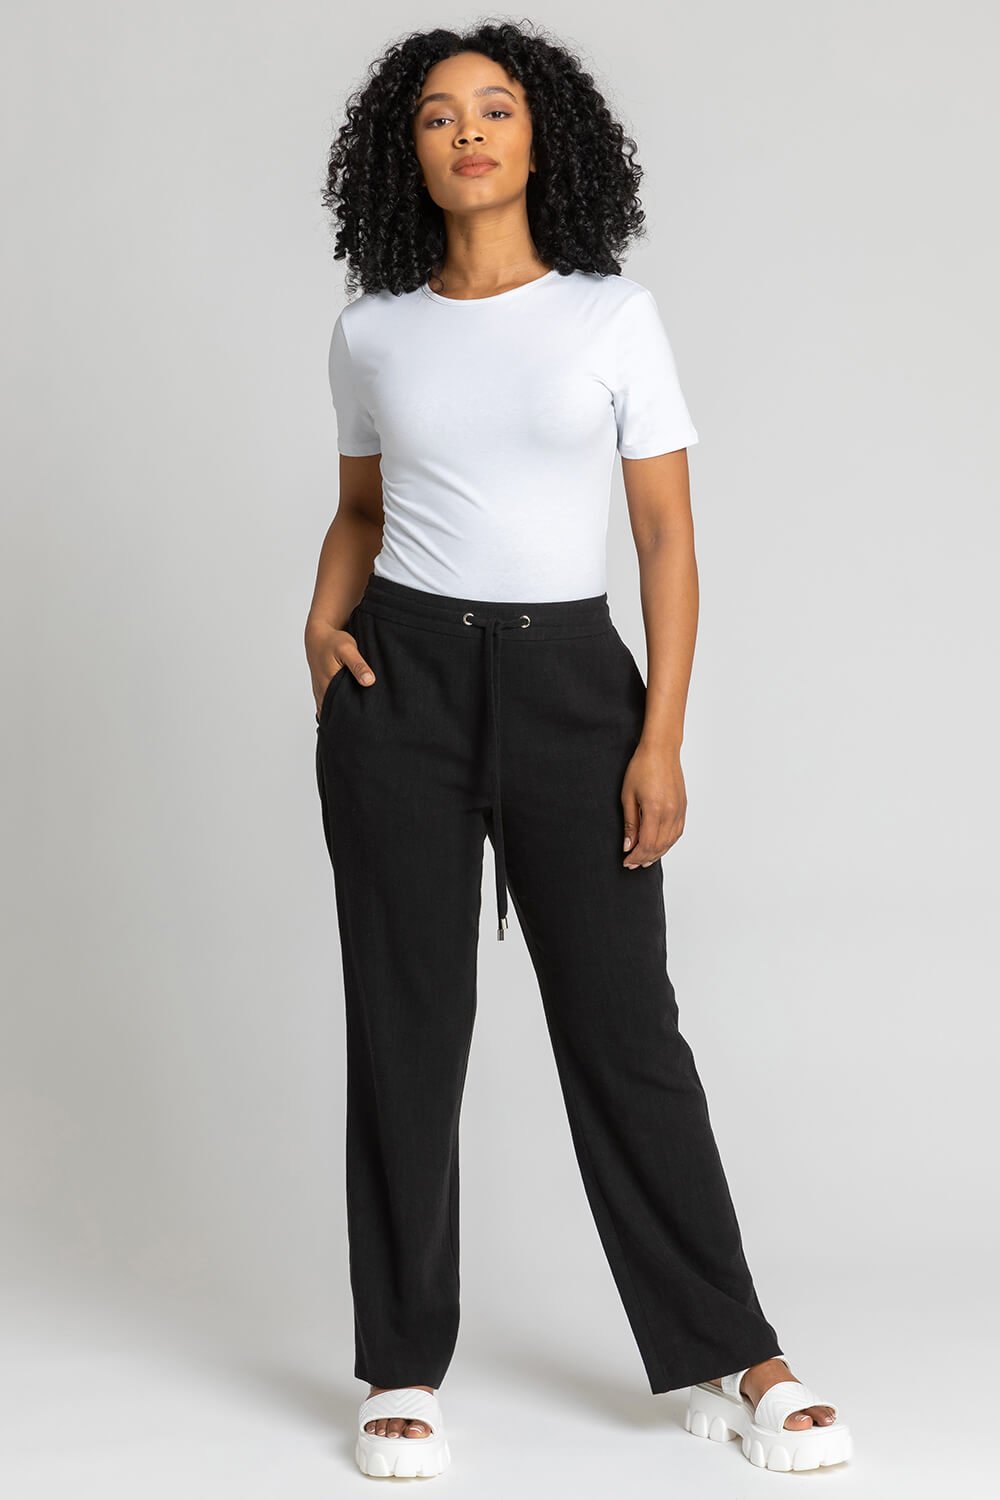 Woven Cotton Linen Trouser in Black  Venroy  Premium Leisurewear designed  in Australia